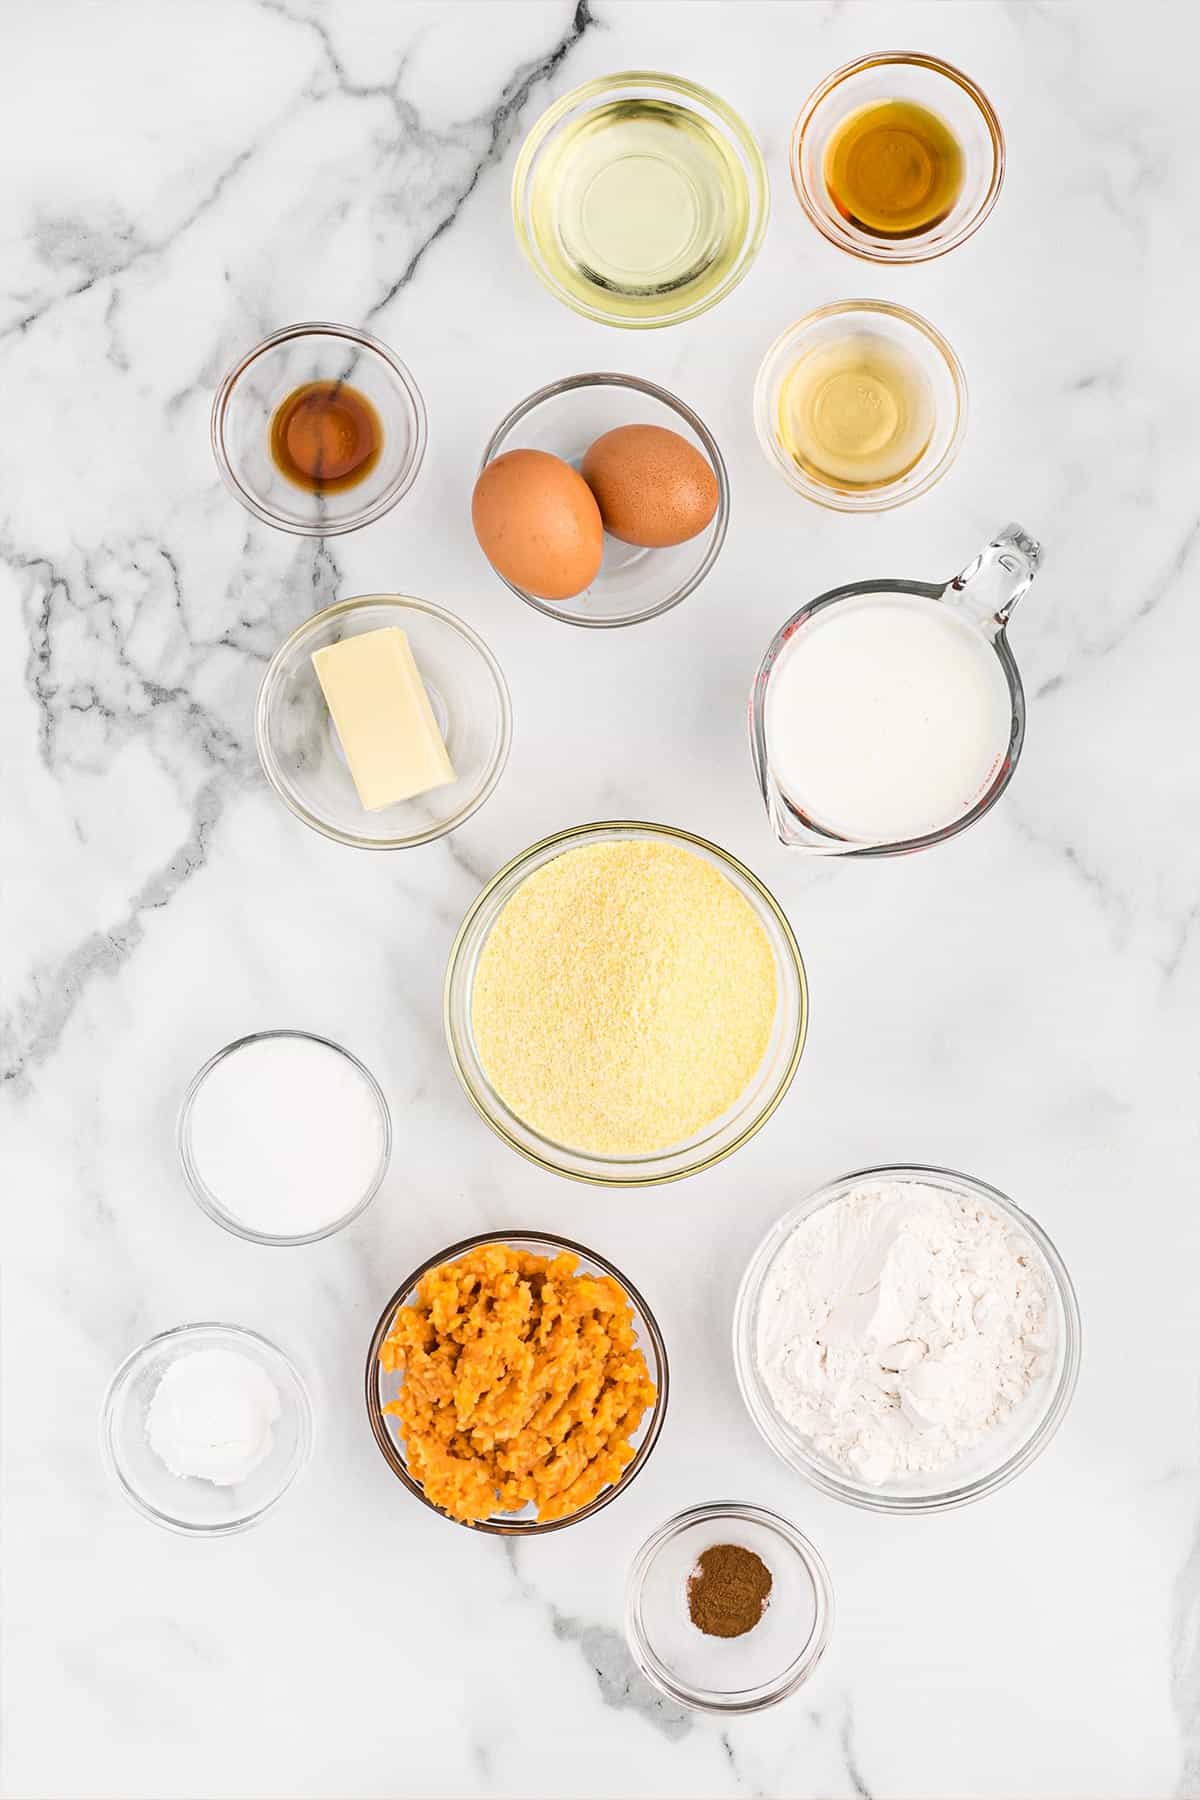 Ingredients to make sweet potato cornbread on the table.